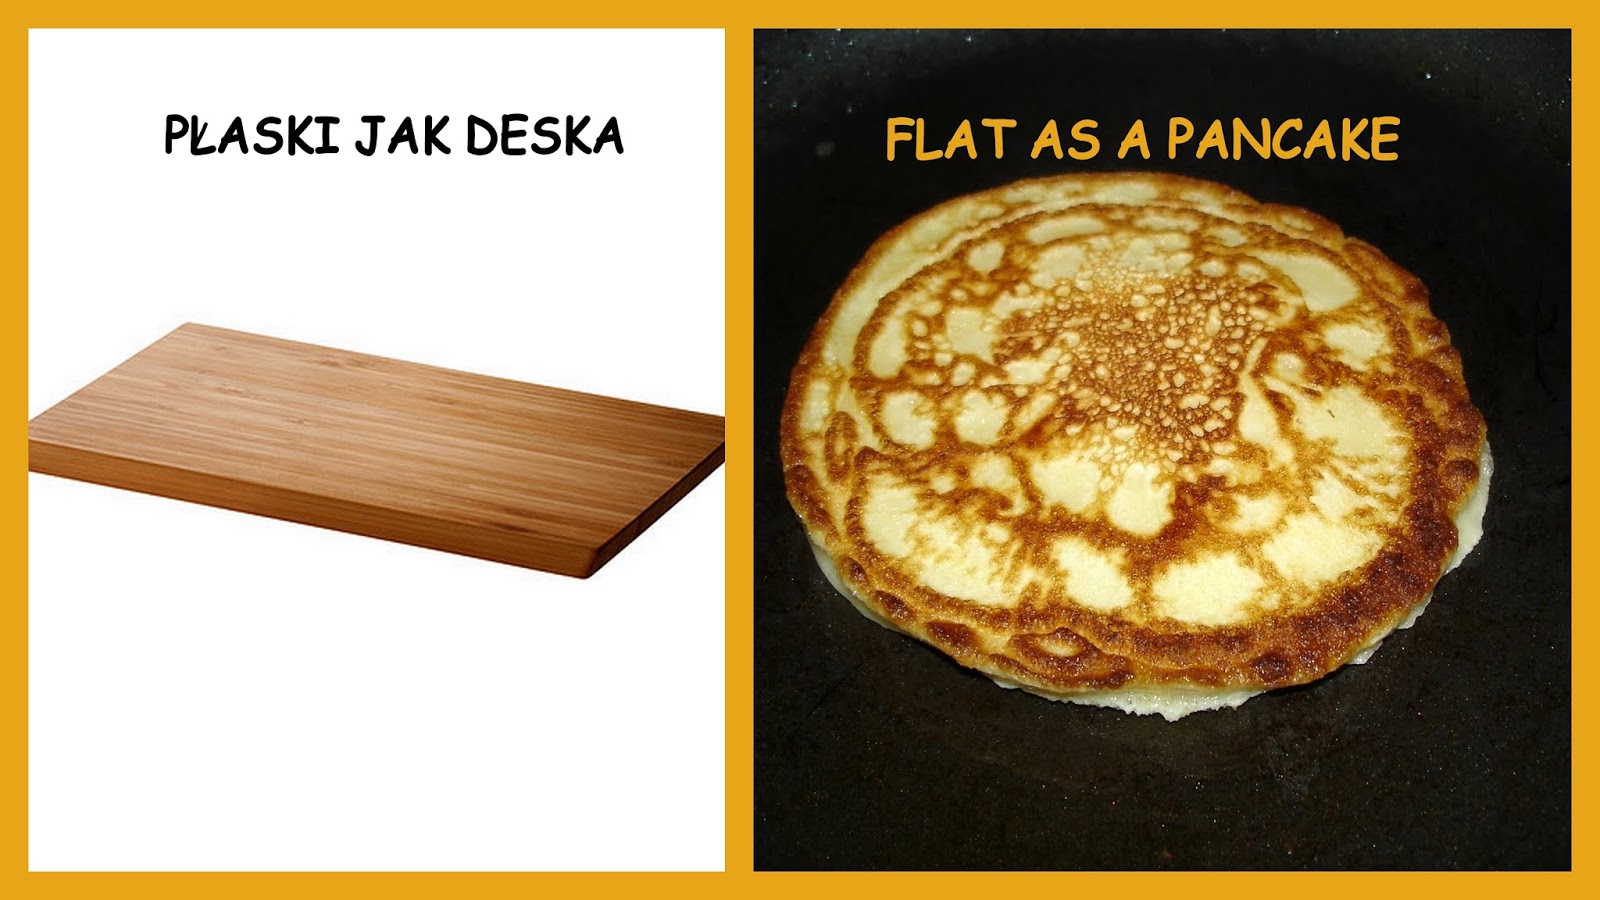 In English Pleaseee Flat As A Pancake